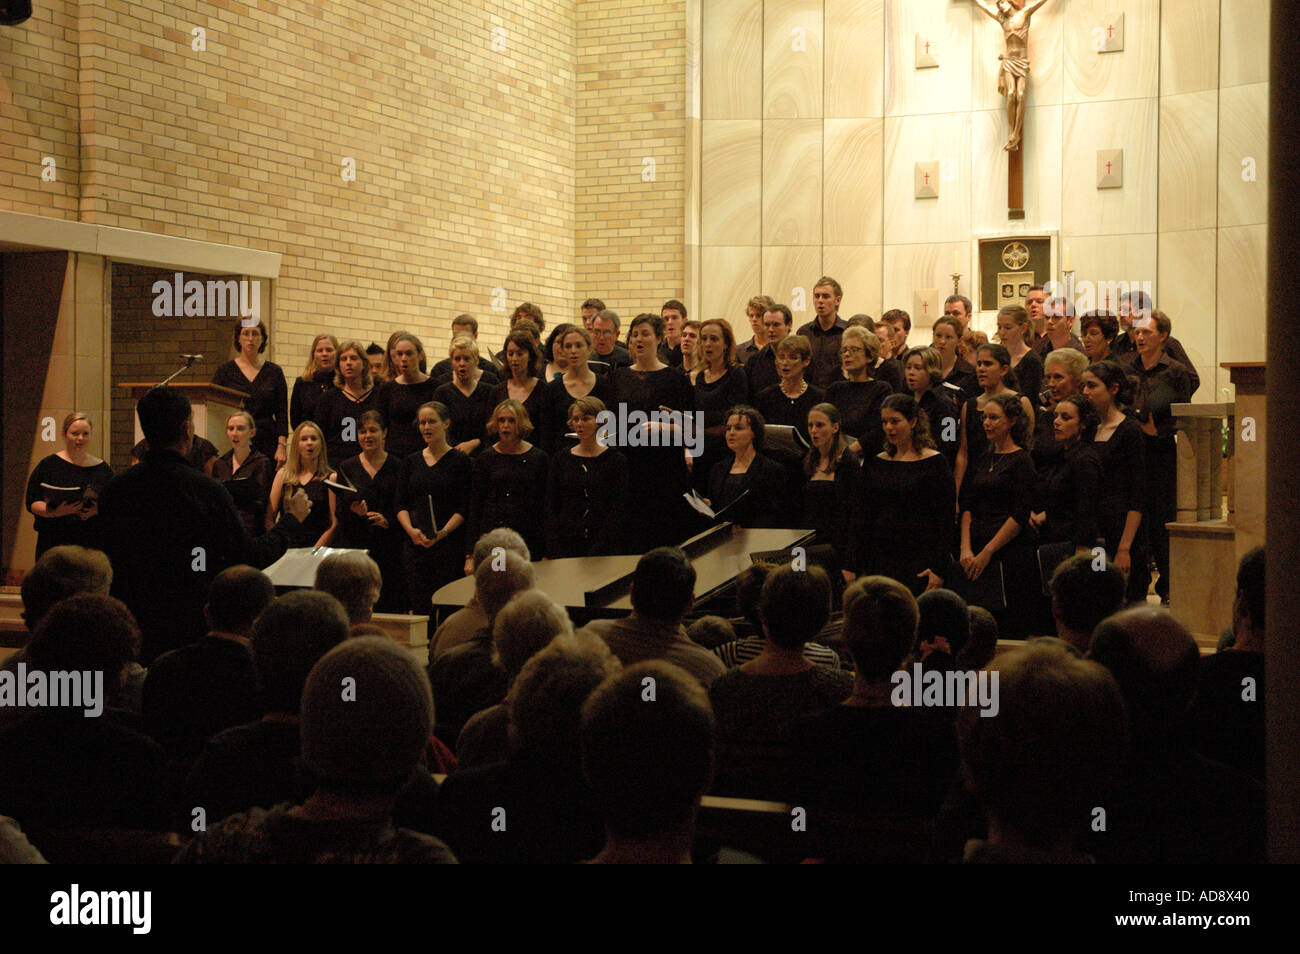 Church choir Brisbane Australia dsca 4751 Stock Photo